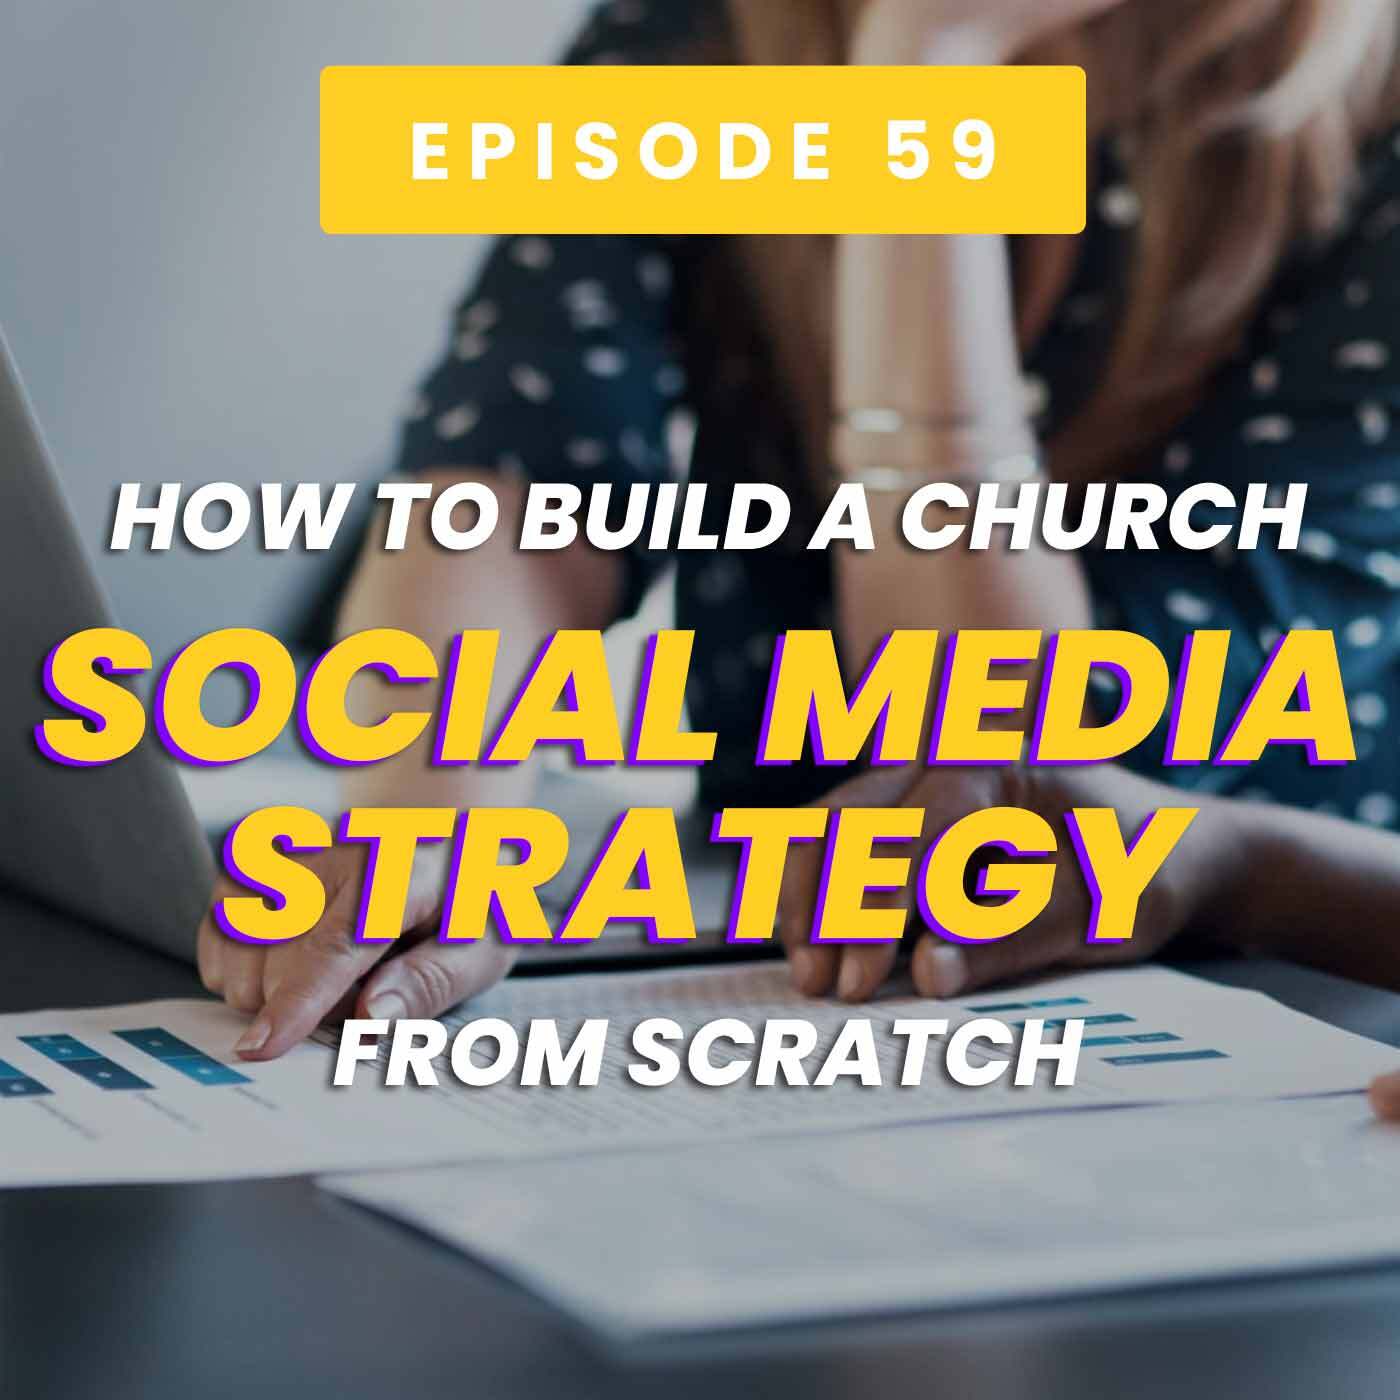 Church Social Media Strategy Template